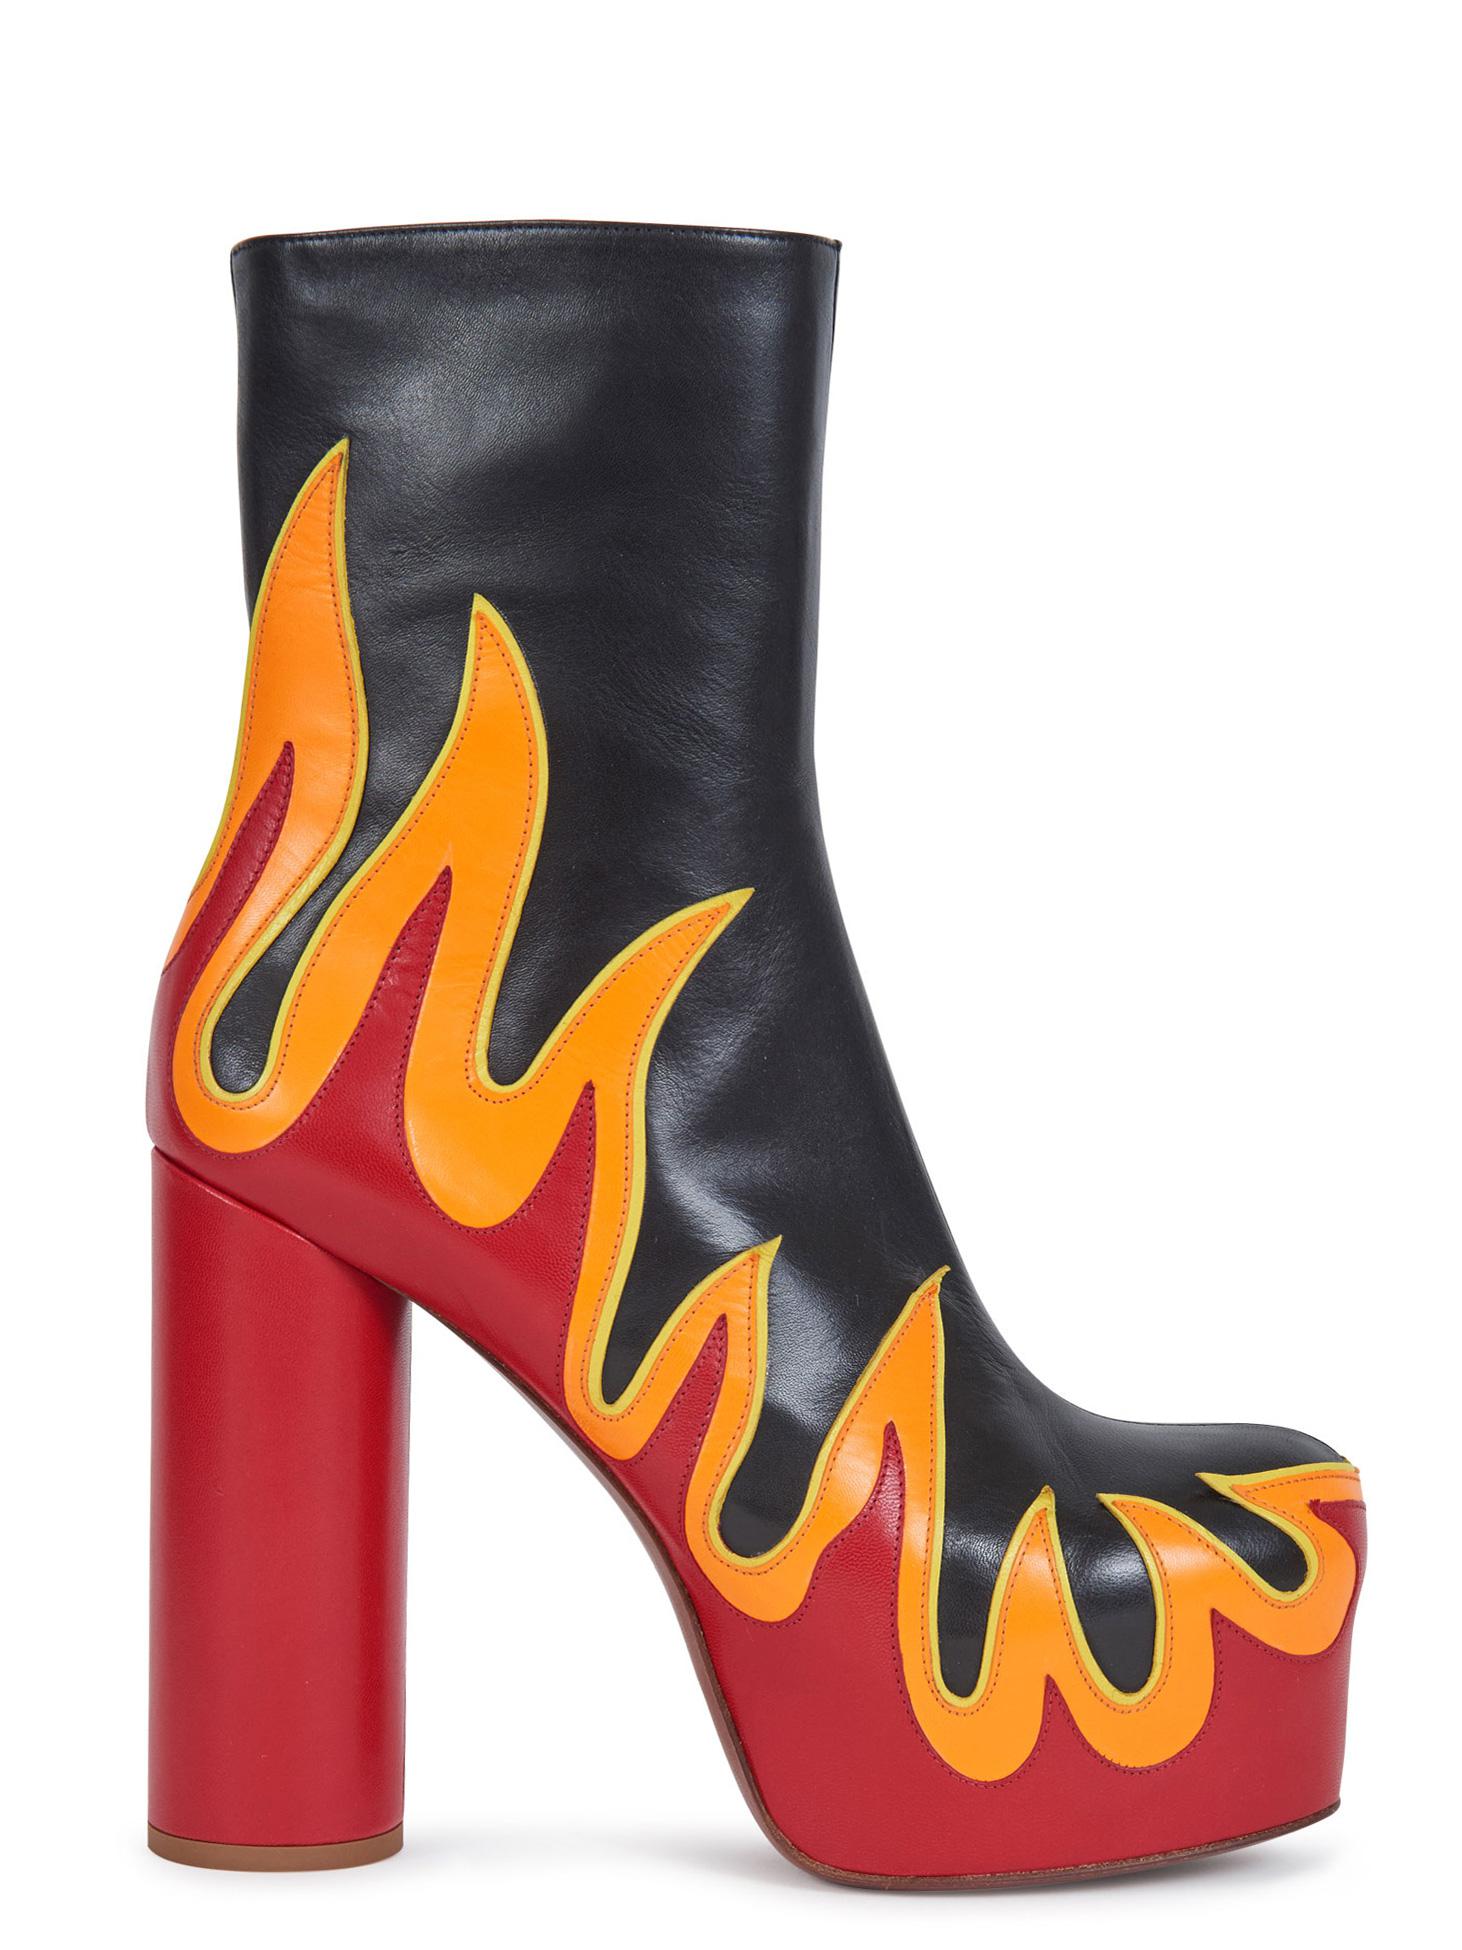 Lyst - Vetements Flame Leather Platform Boots